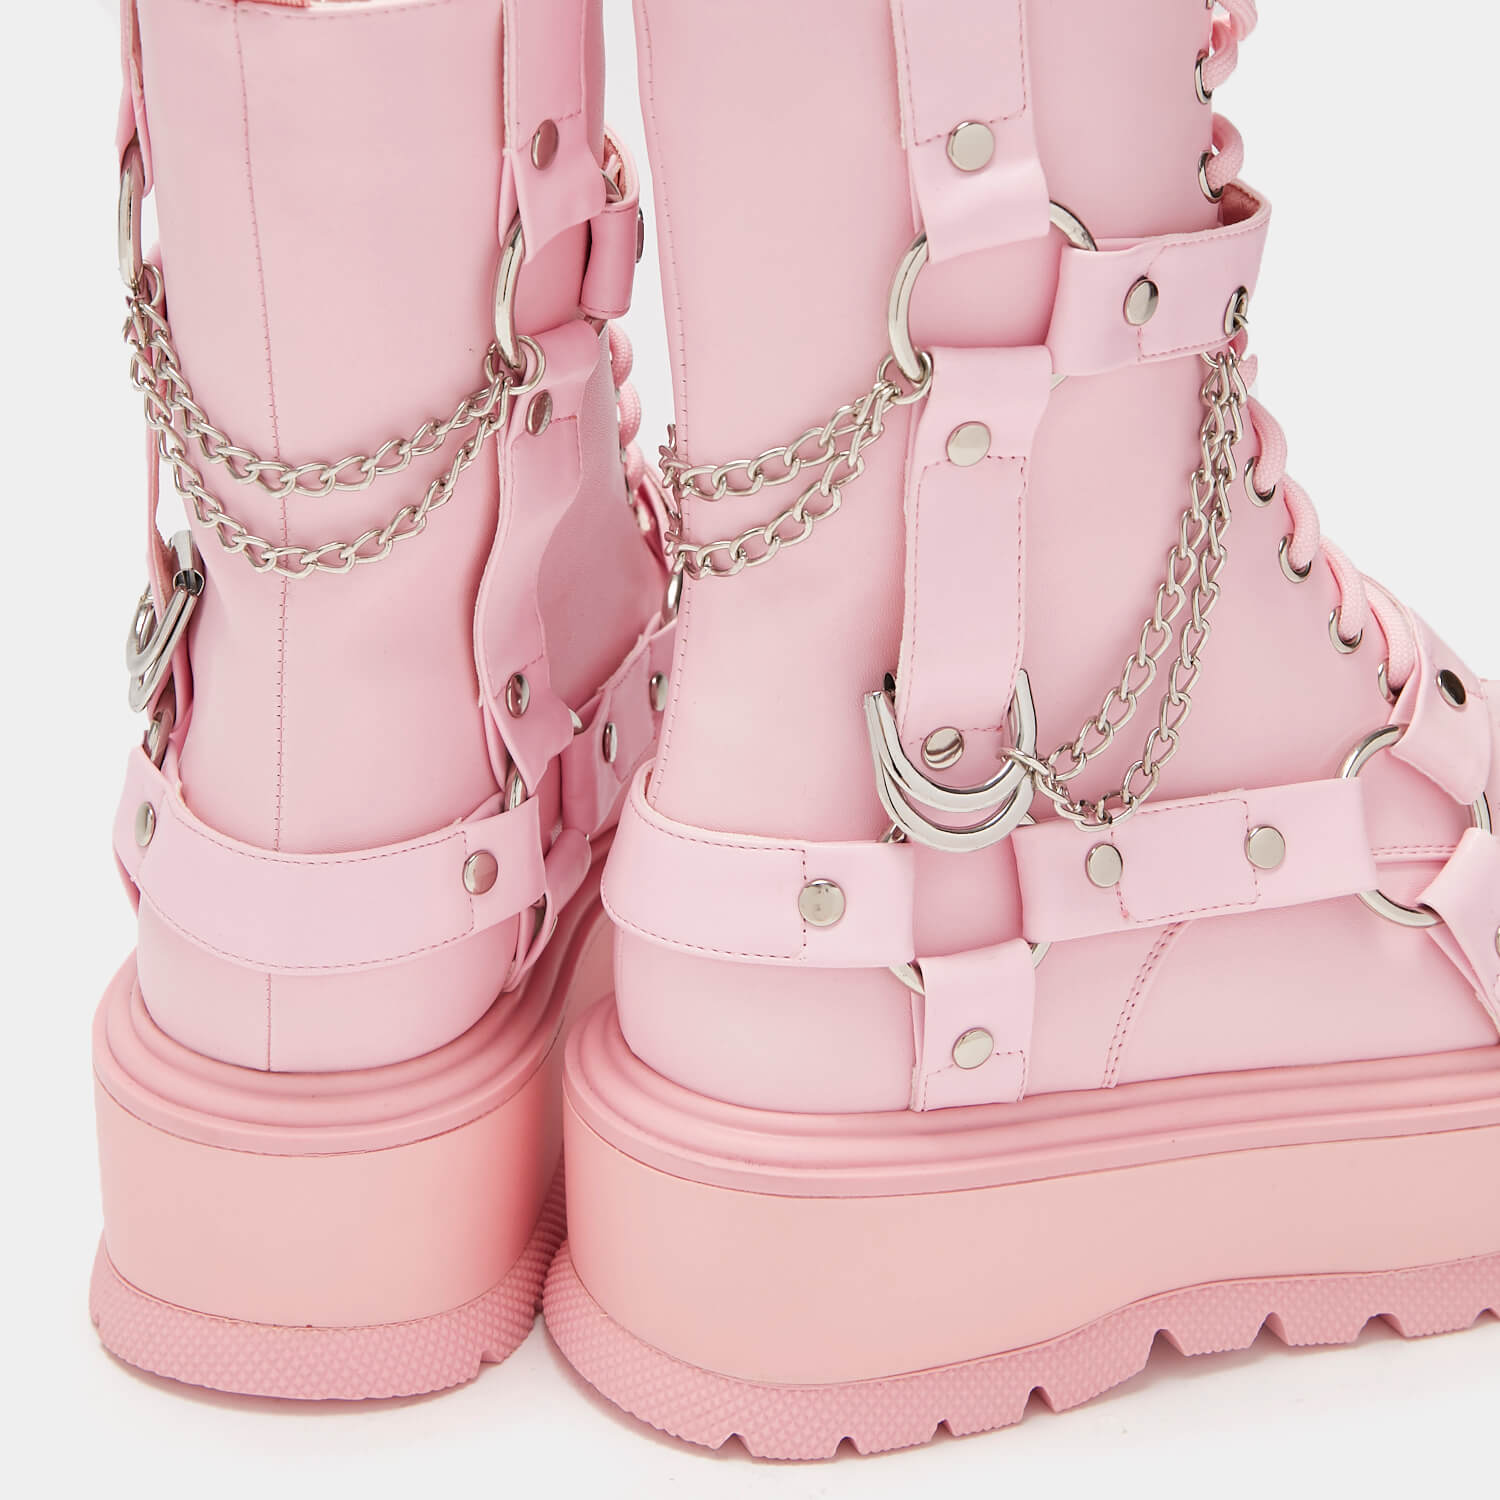 Yami Pastel Pink Platform Boots - Ankle Boots - KOI Footwear - Pink - Back Detail